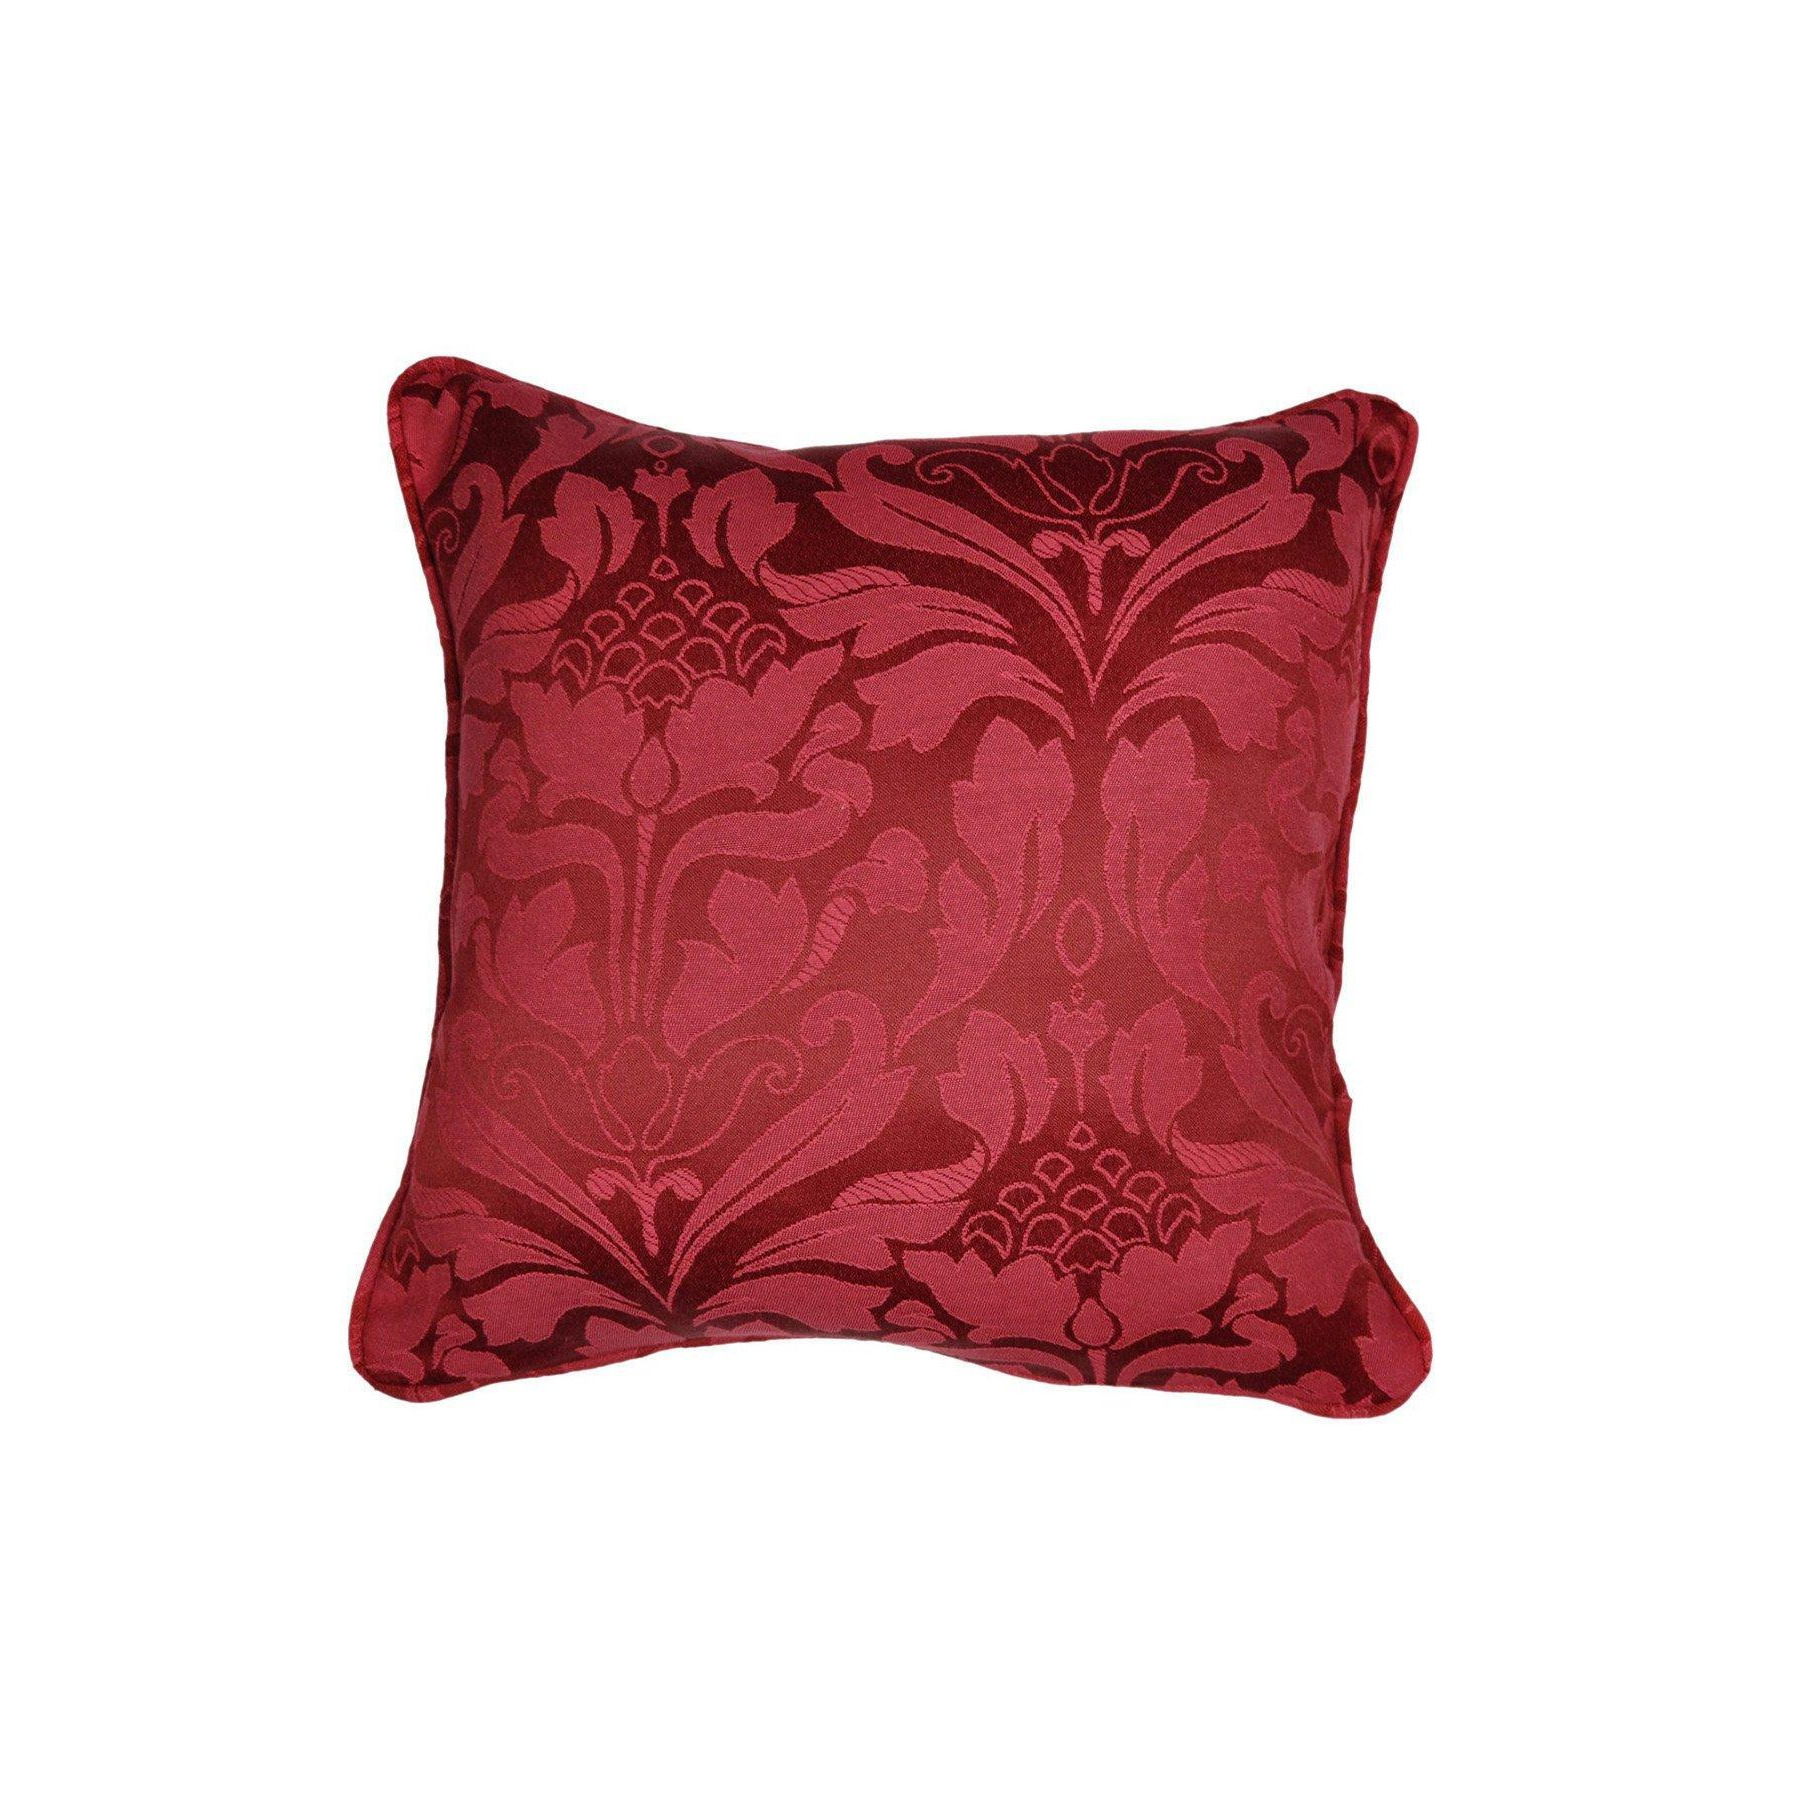 'Eastbourne' Damask Woven Jacquard Filled Cushion - image 1